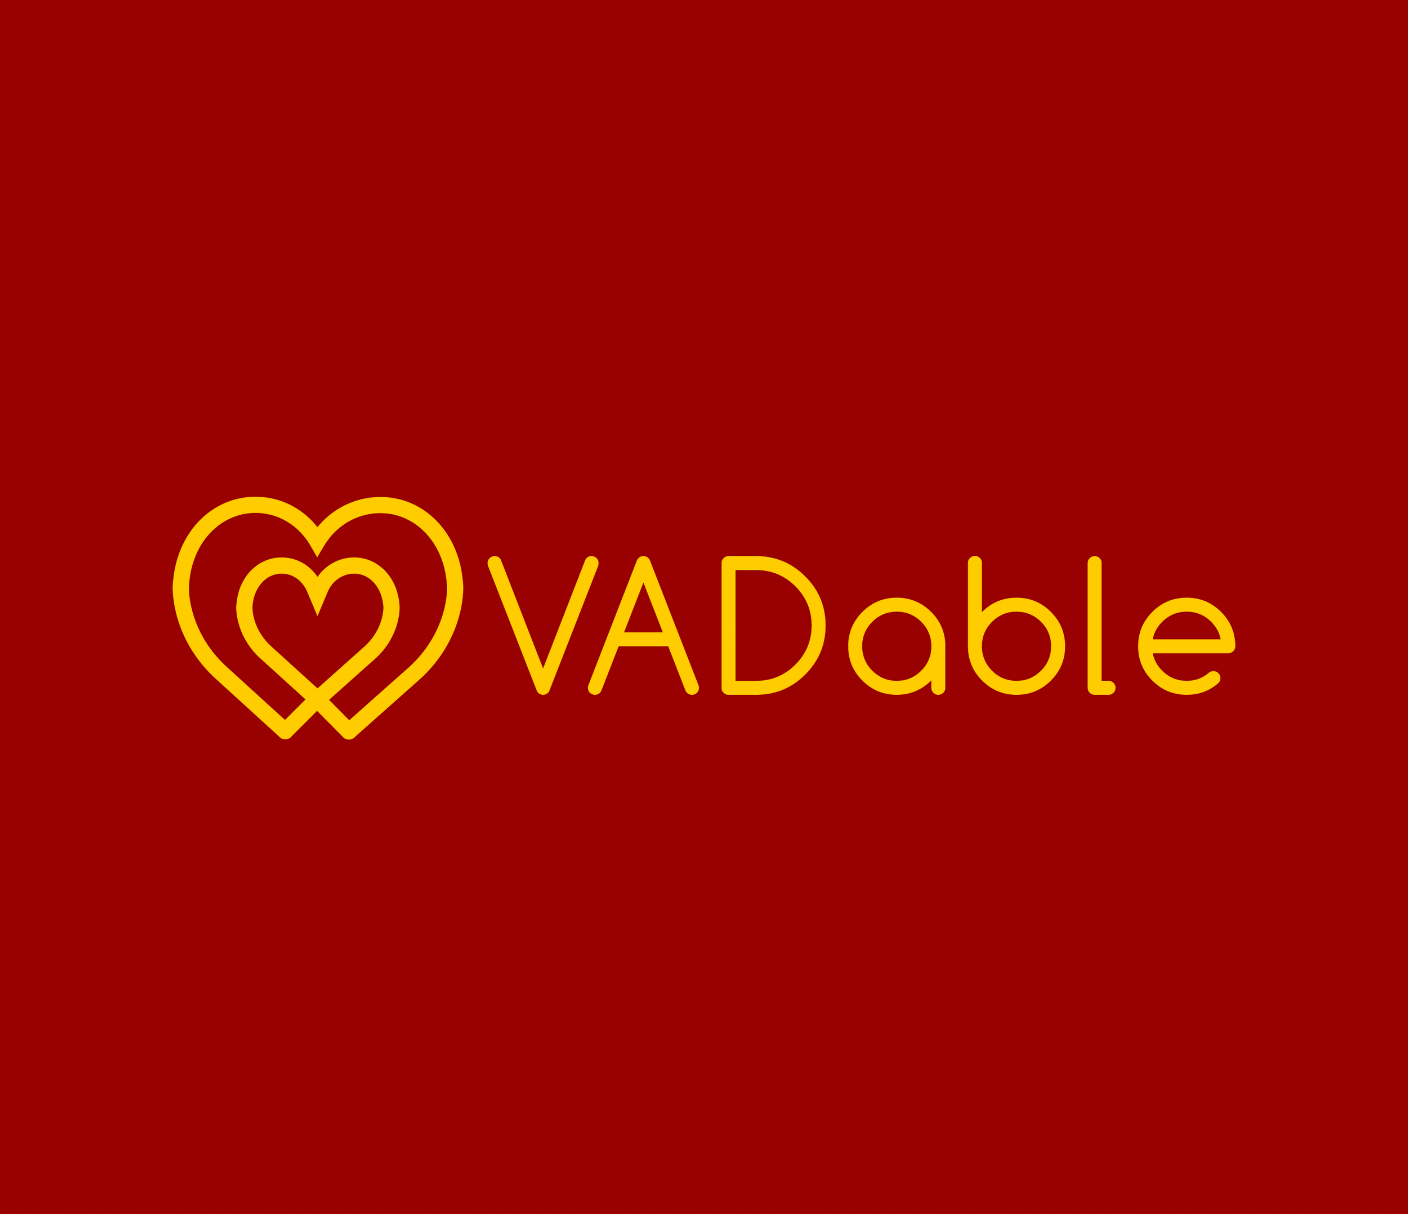 VADable brand logo